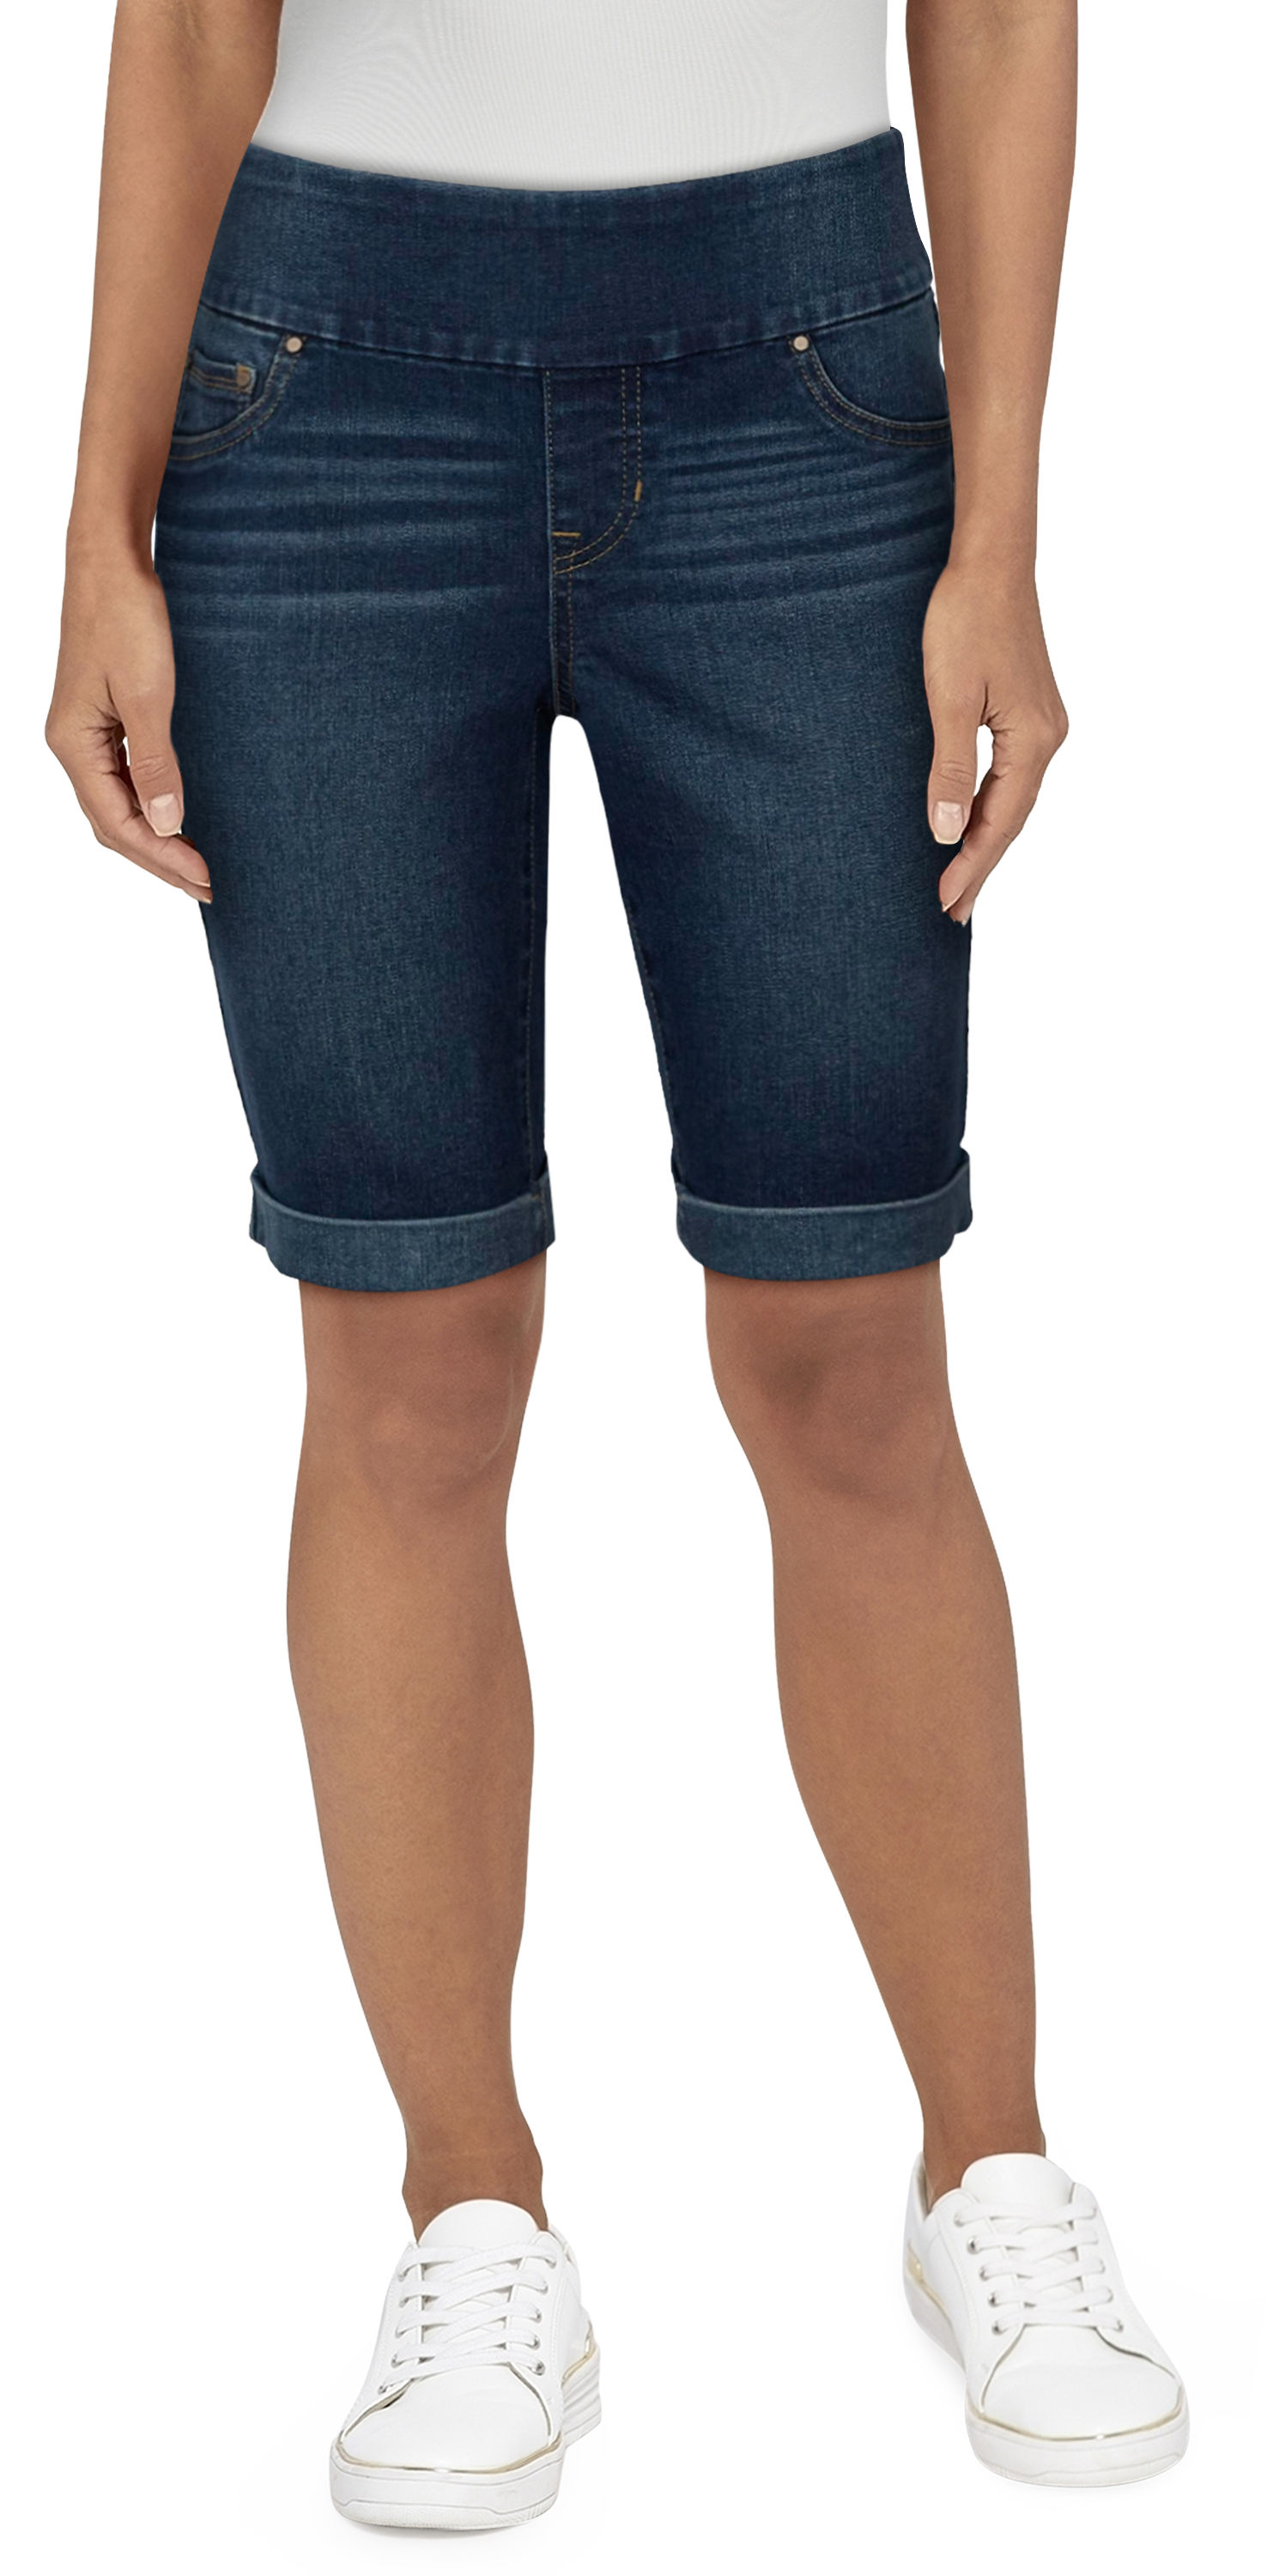 Natural Reflections Comfort Waist Bermuda Shorts for Ladies - Dark Wash - 12